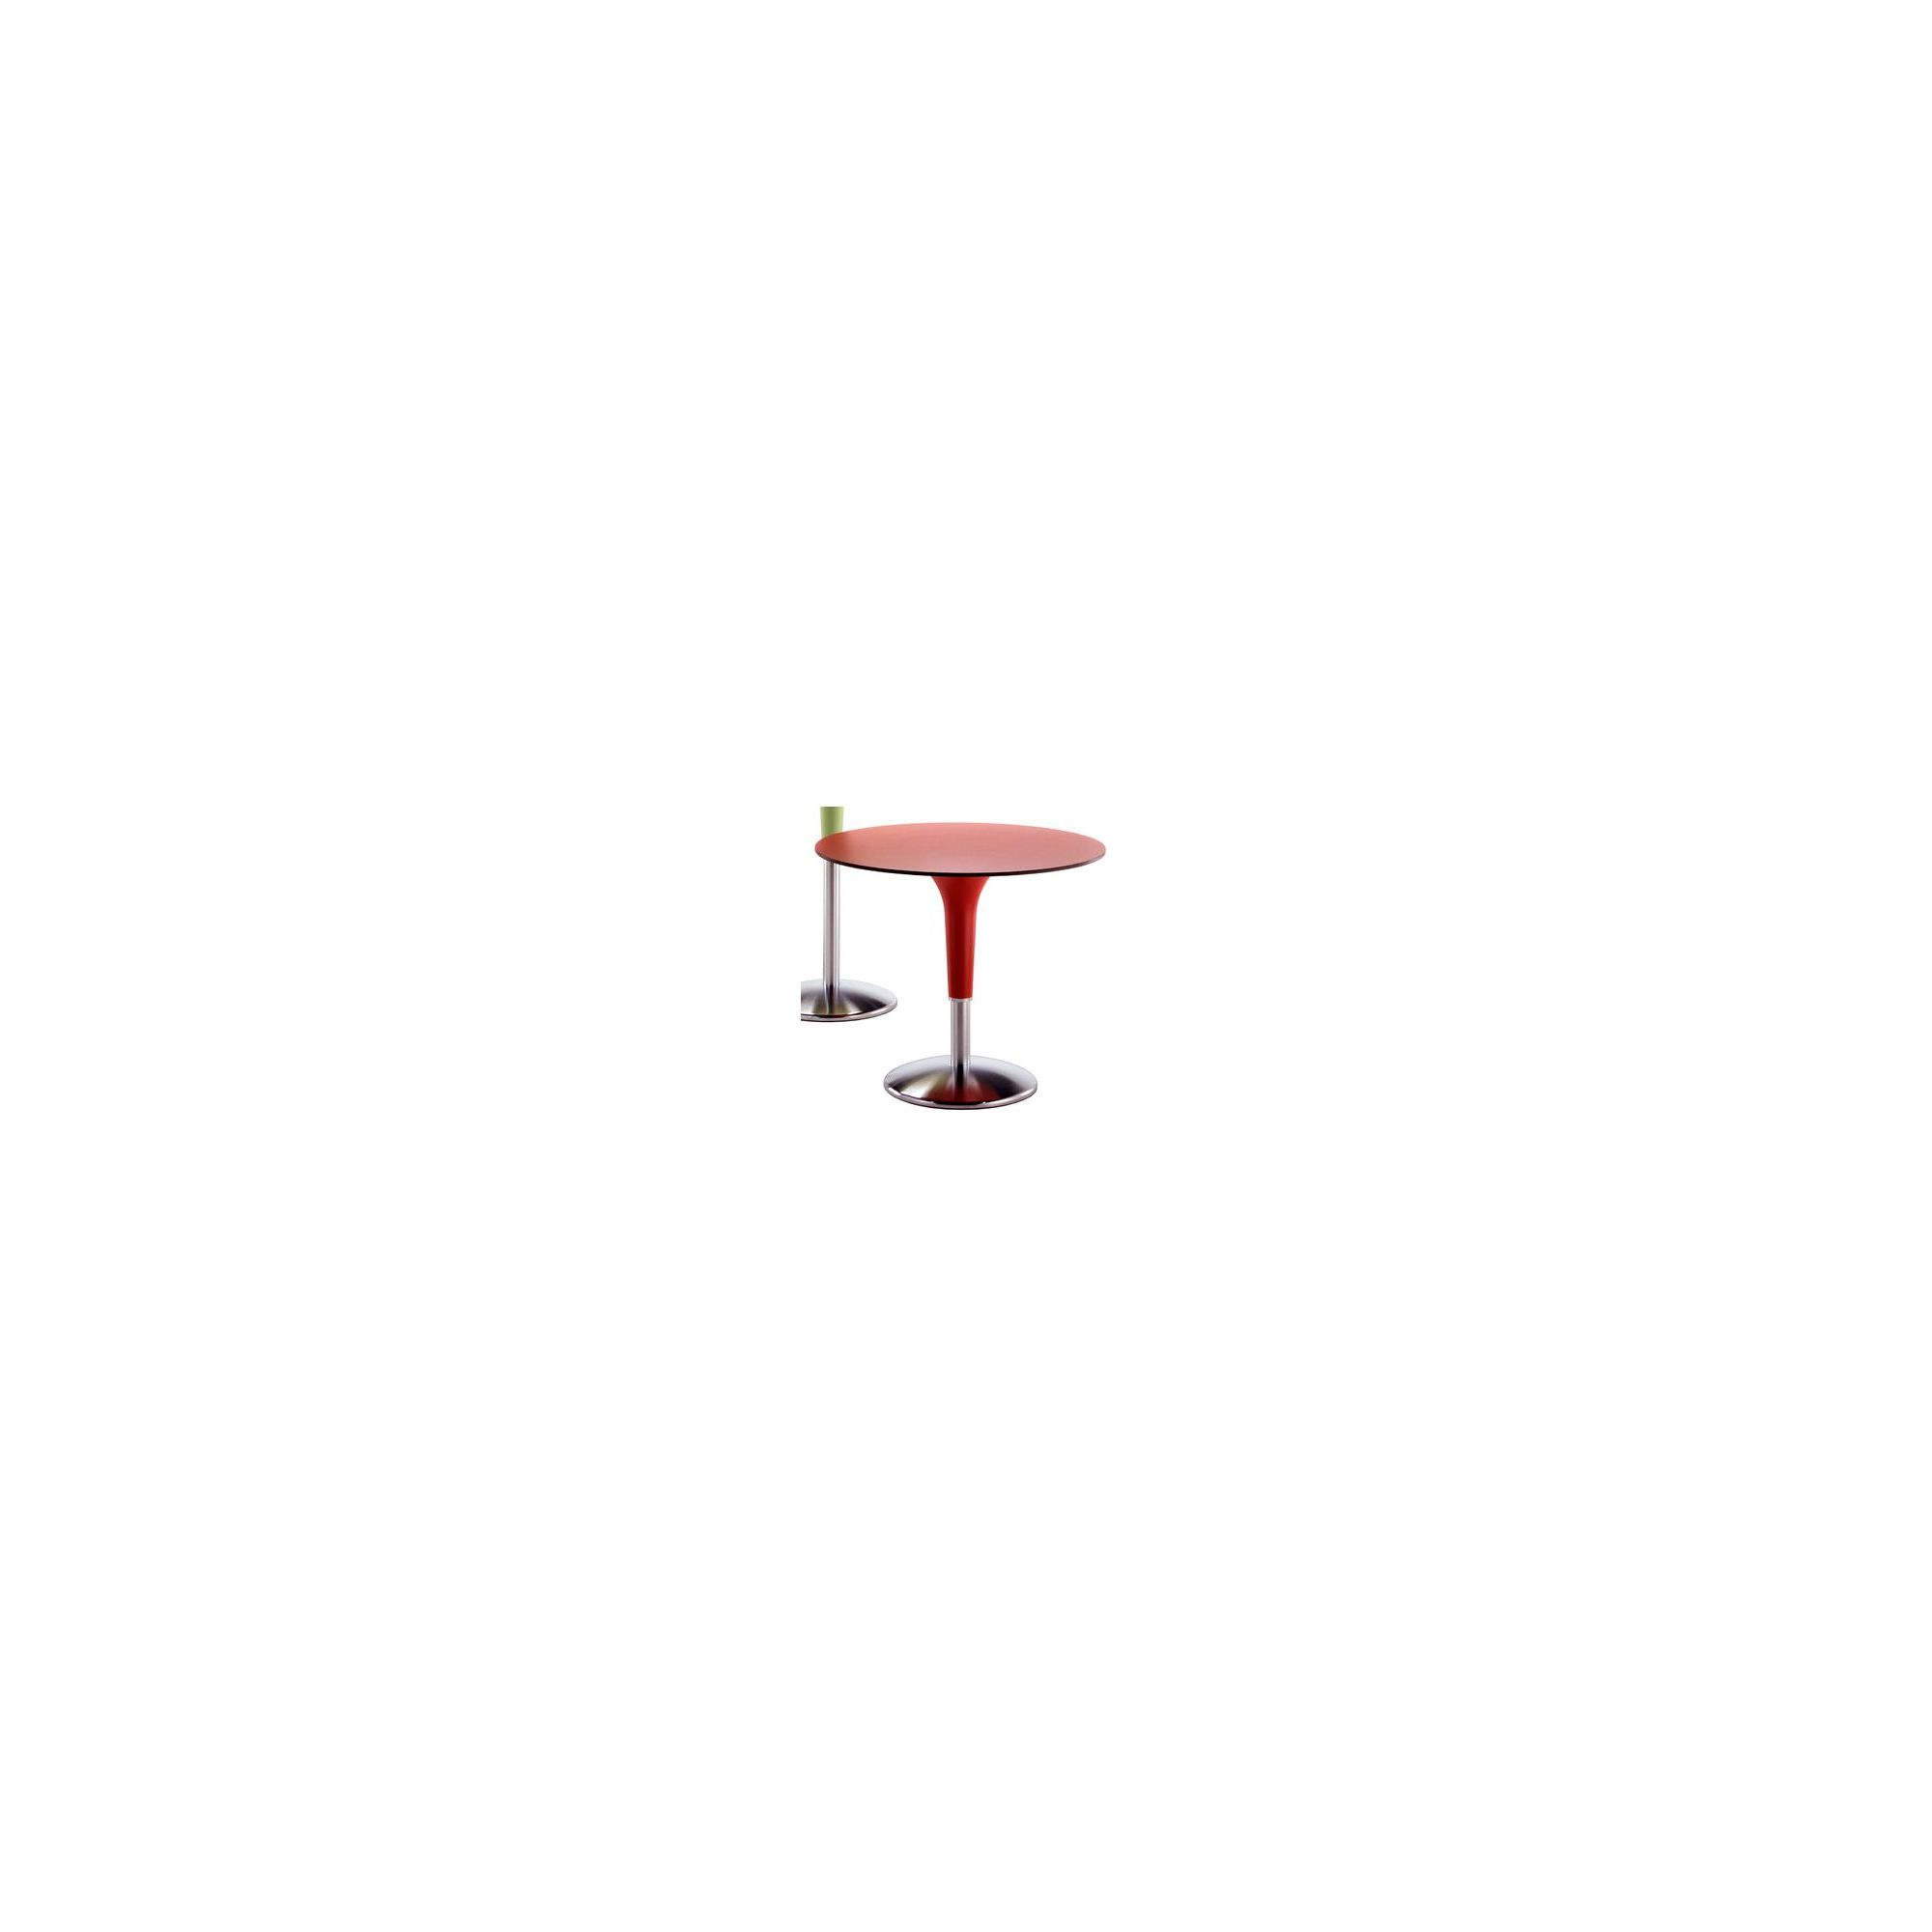 Rexite Zanziplano Round Coffee Table - 60cm x 75cm - Red at Tescos Direct